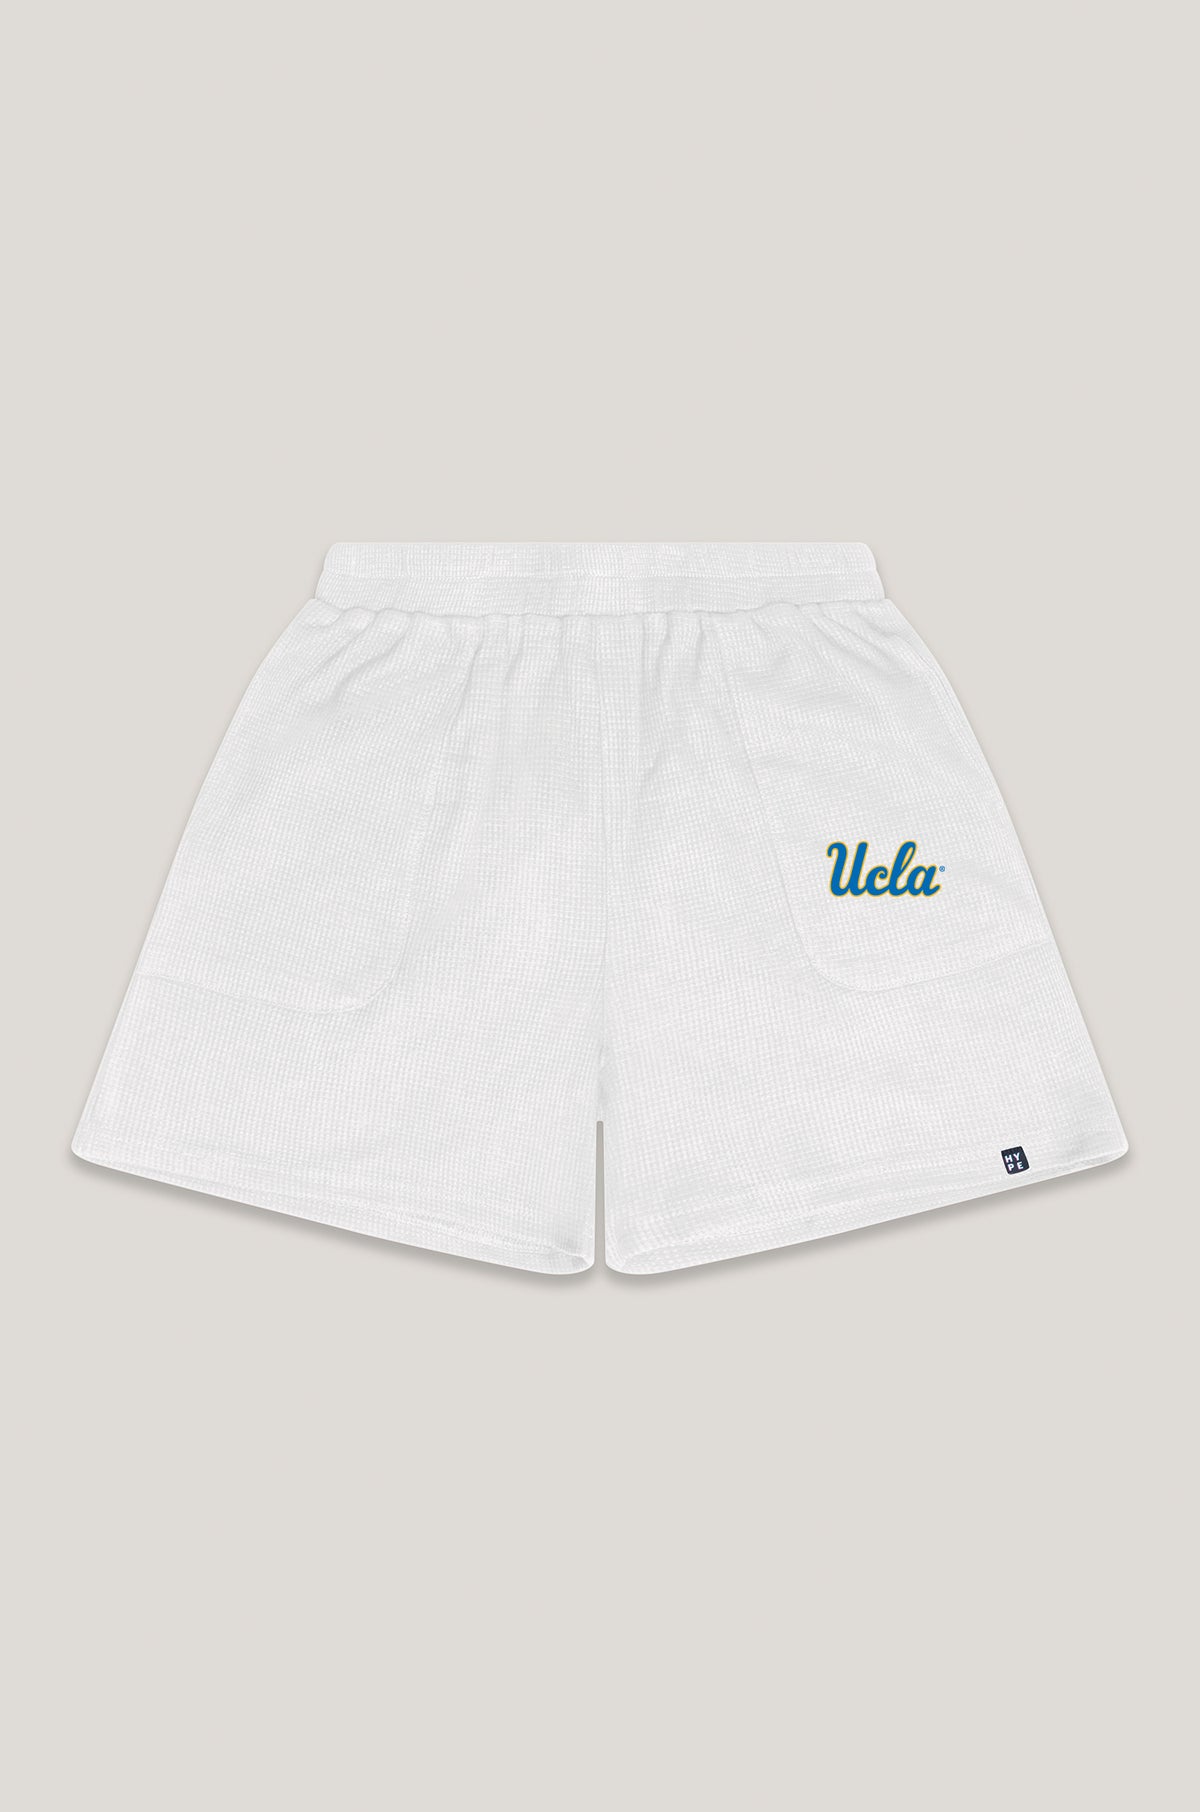 UCLA Grand Slam Shorts